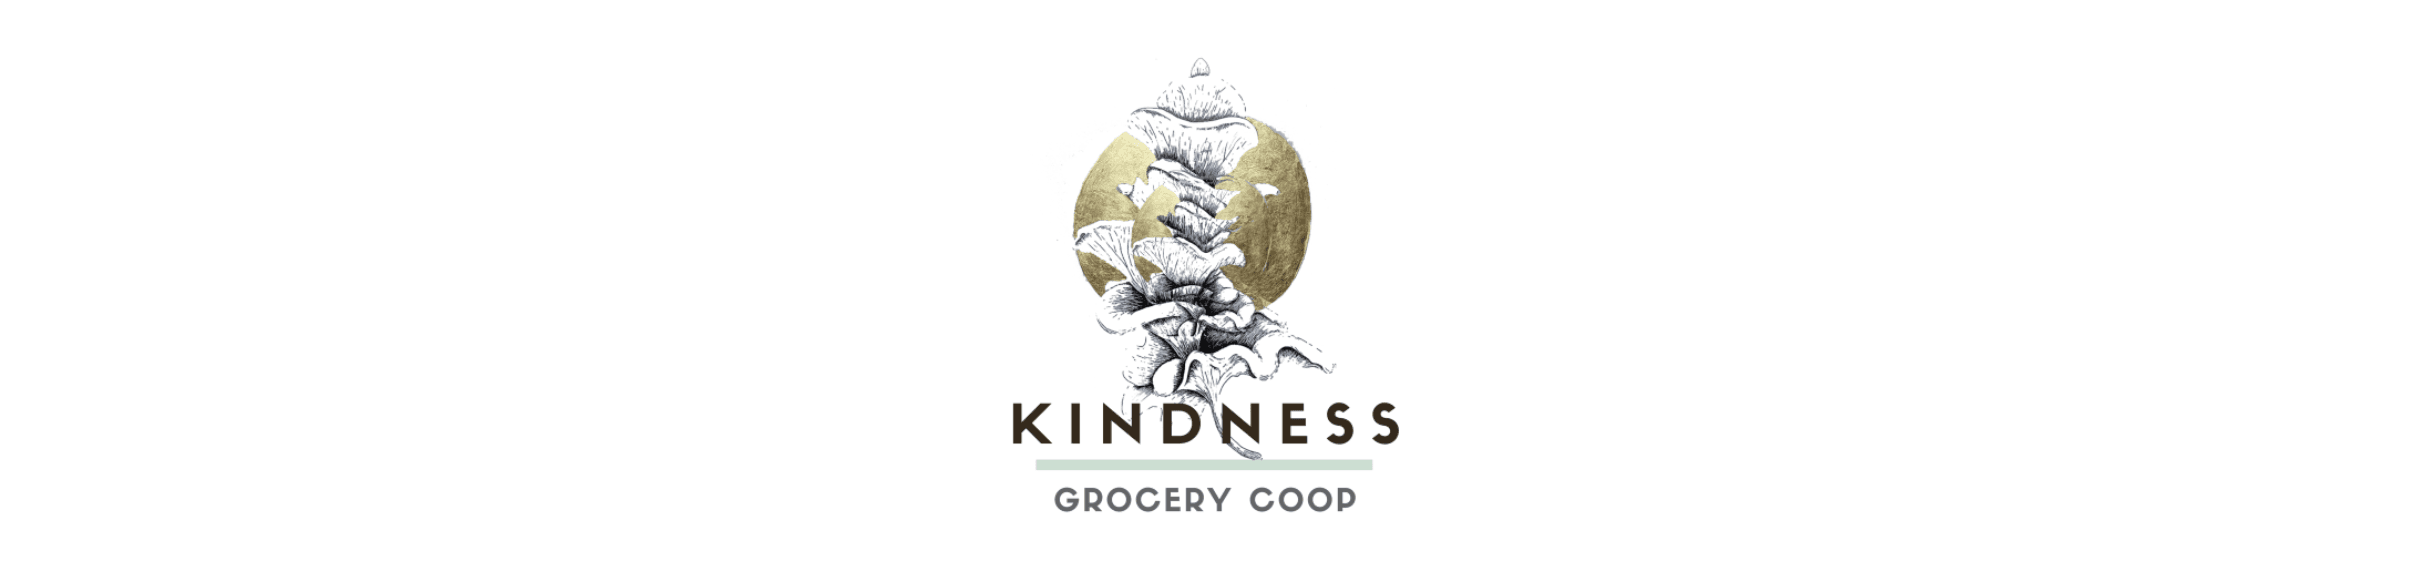 Kindnessgrocerycoop2021 横幅